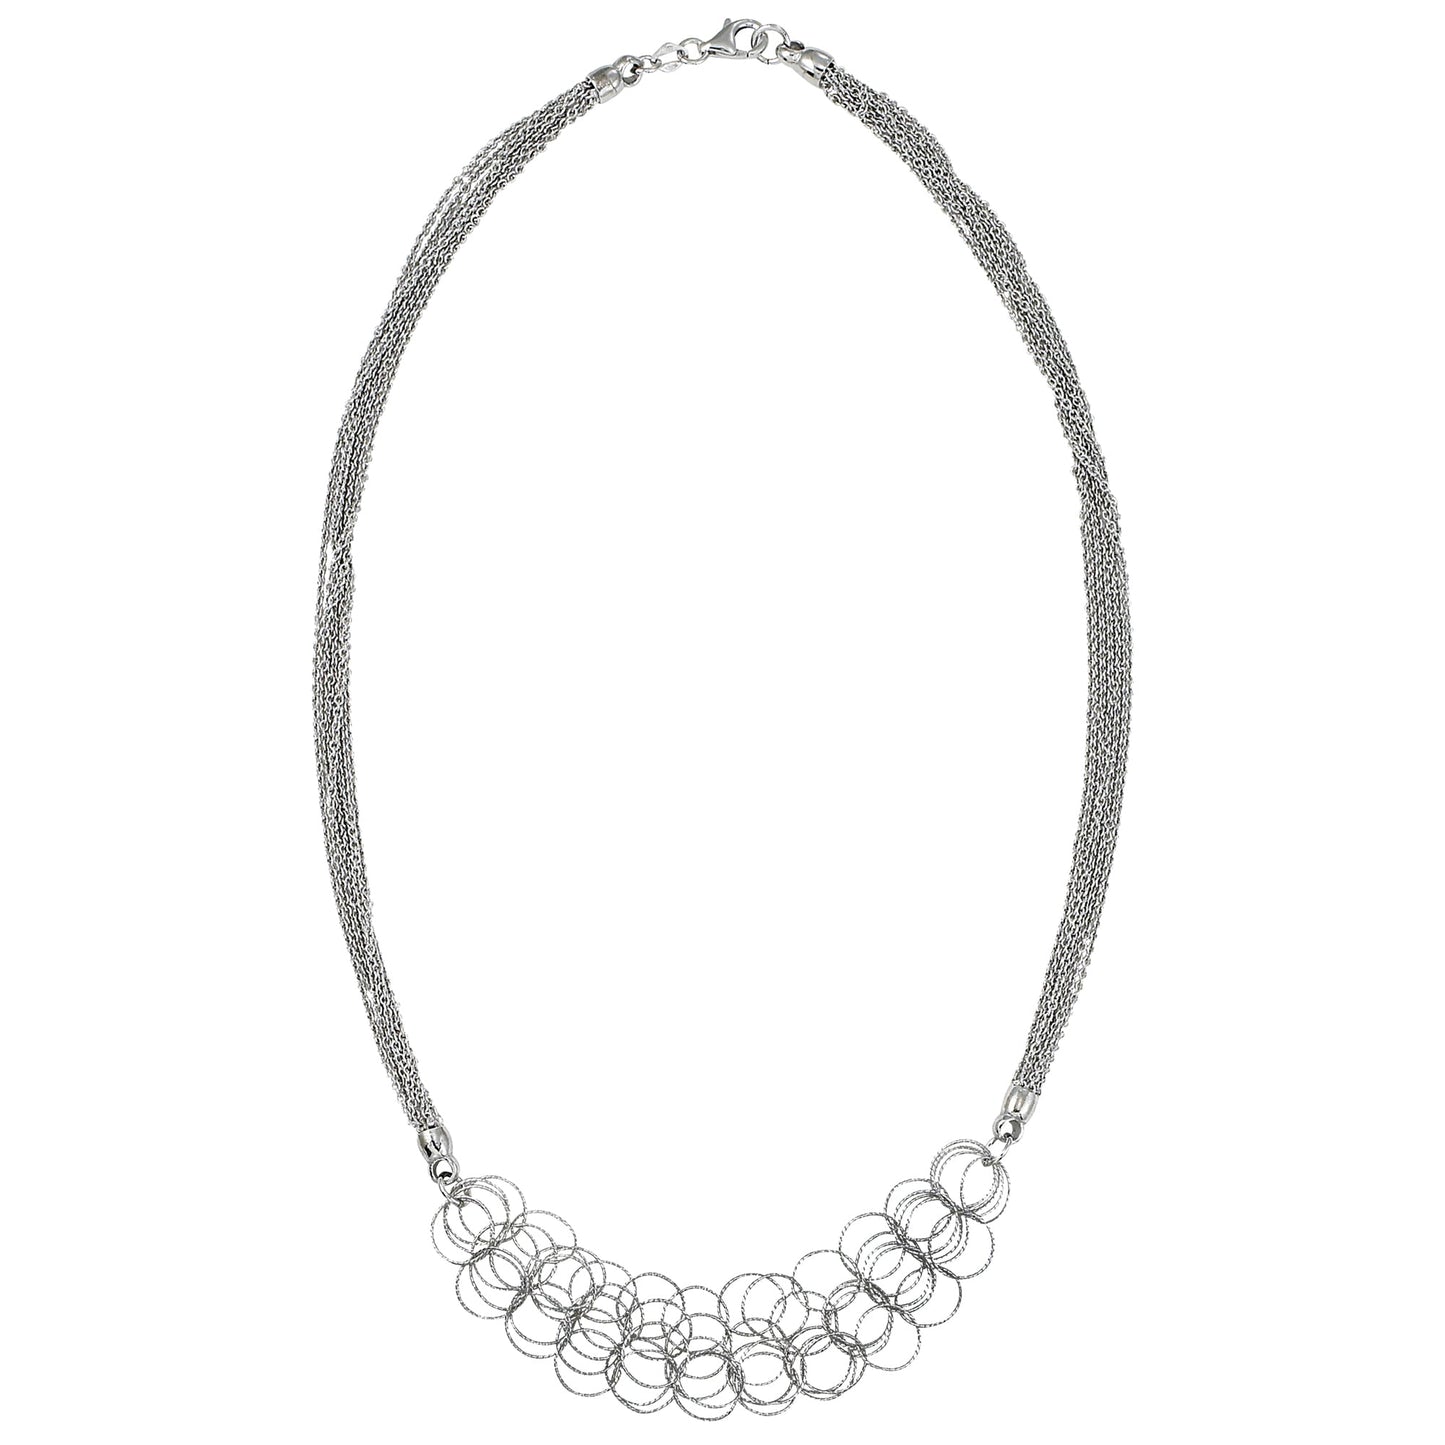 Franco Stellari Italian Sterling Silver Circle Links Multistrand Necklace, 20"